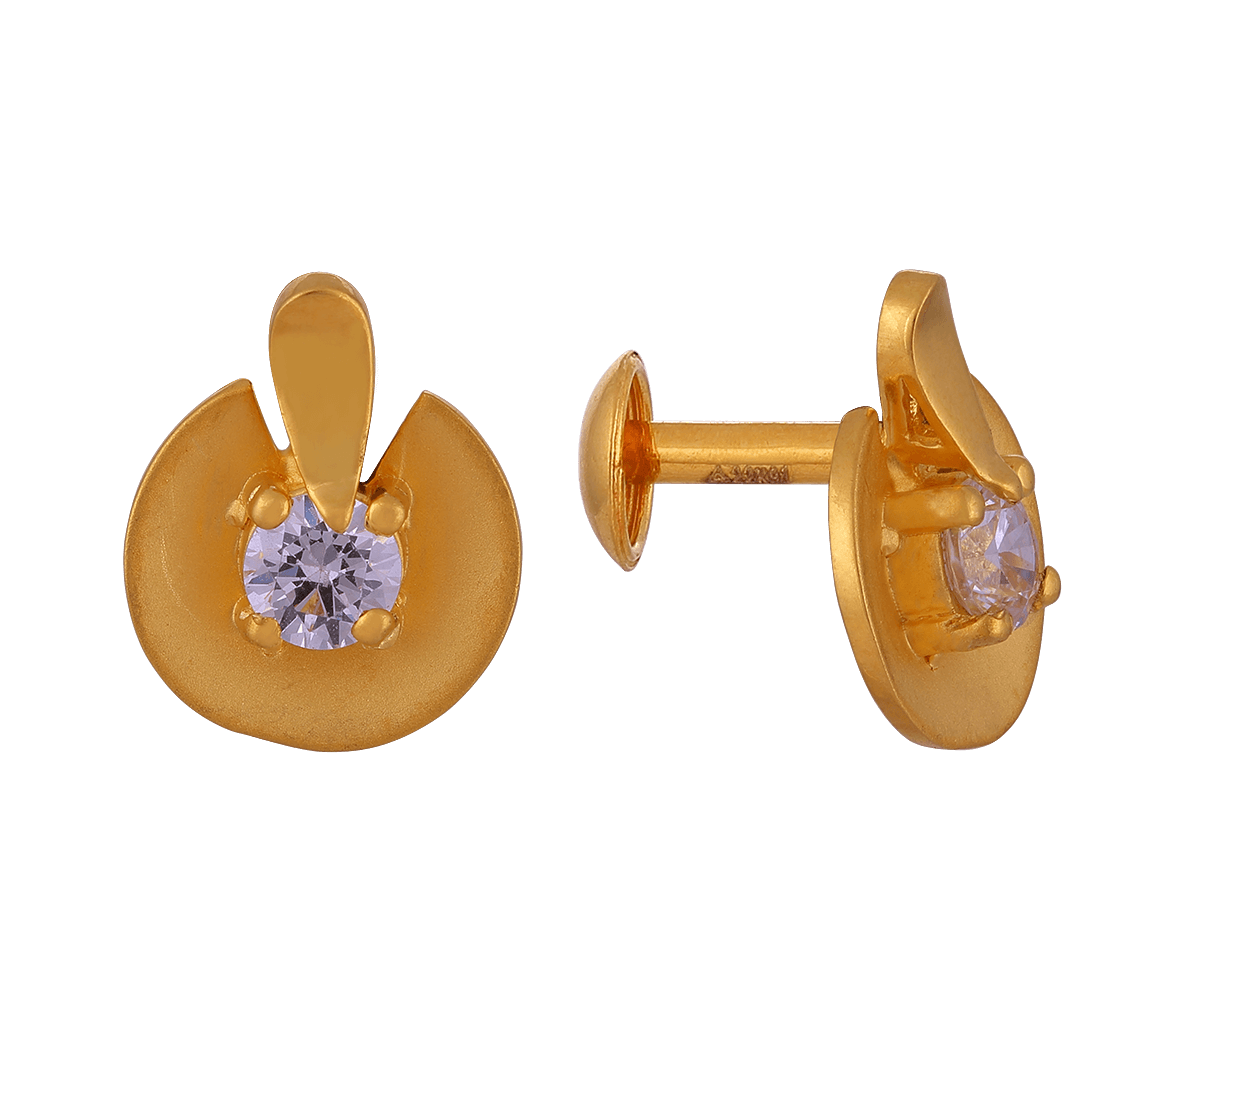 Buy New Model Hoop Earrings Design Single Emerald Stone 1 Gram Gold Earrings